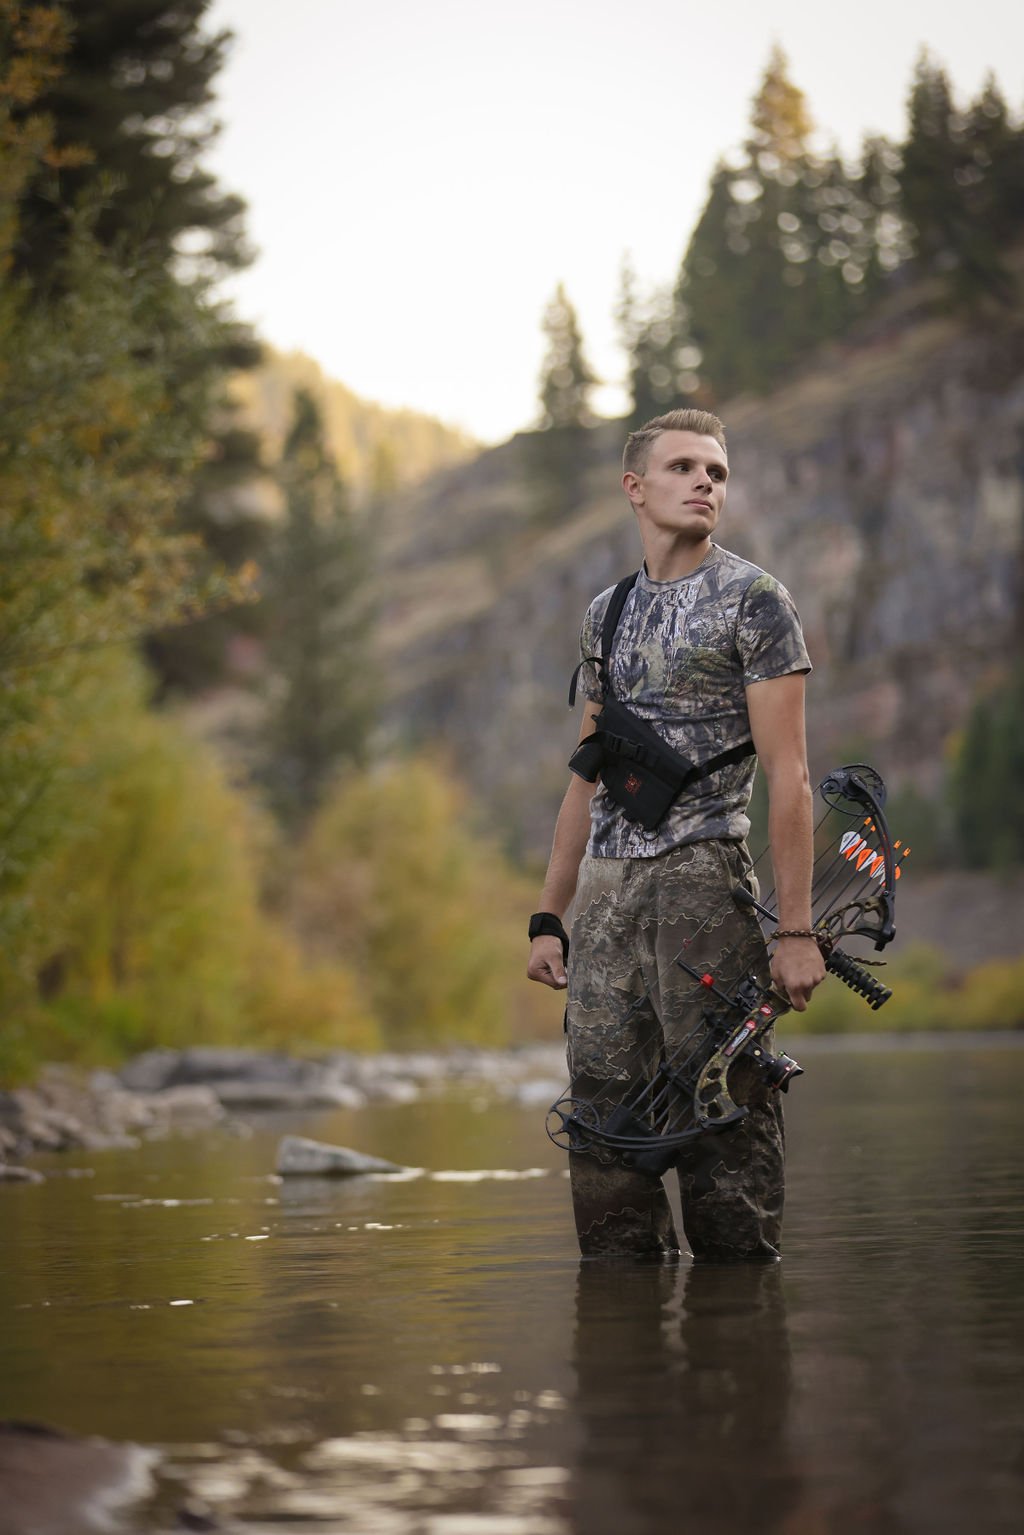 Creative senior portrait ideas of boy in river with bow hunting gear.jpg